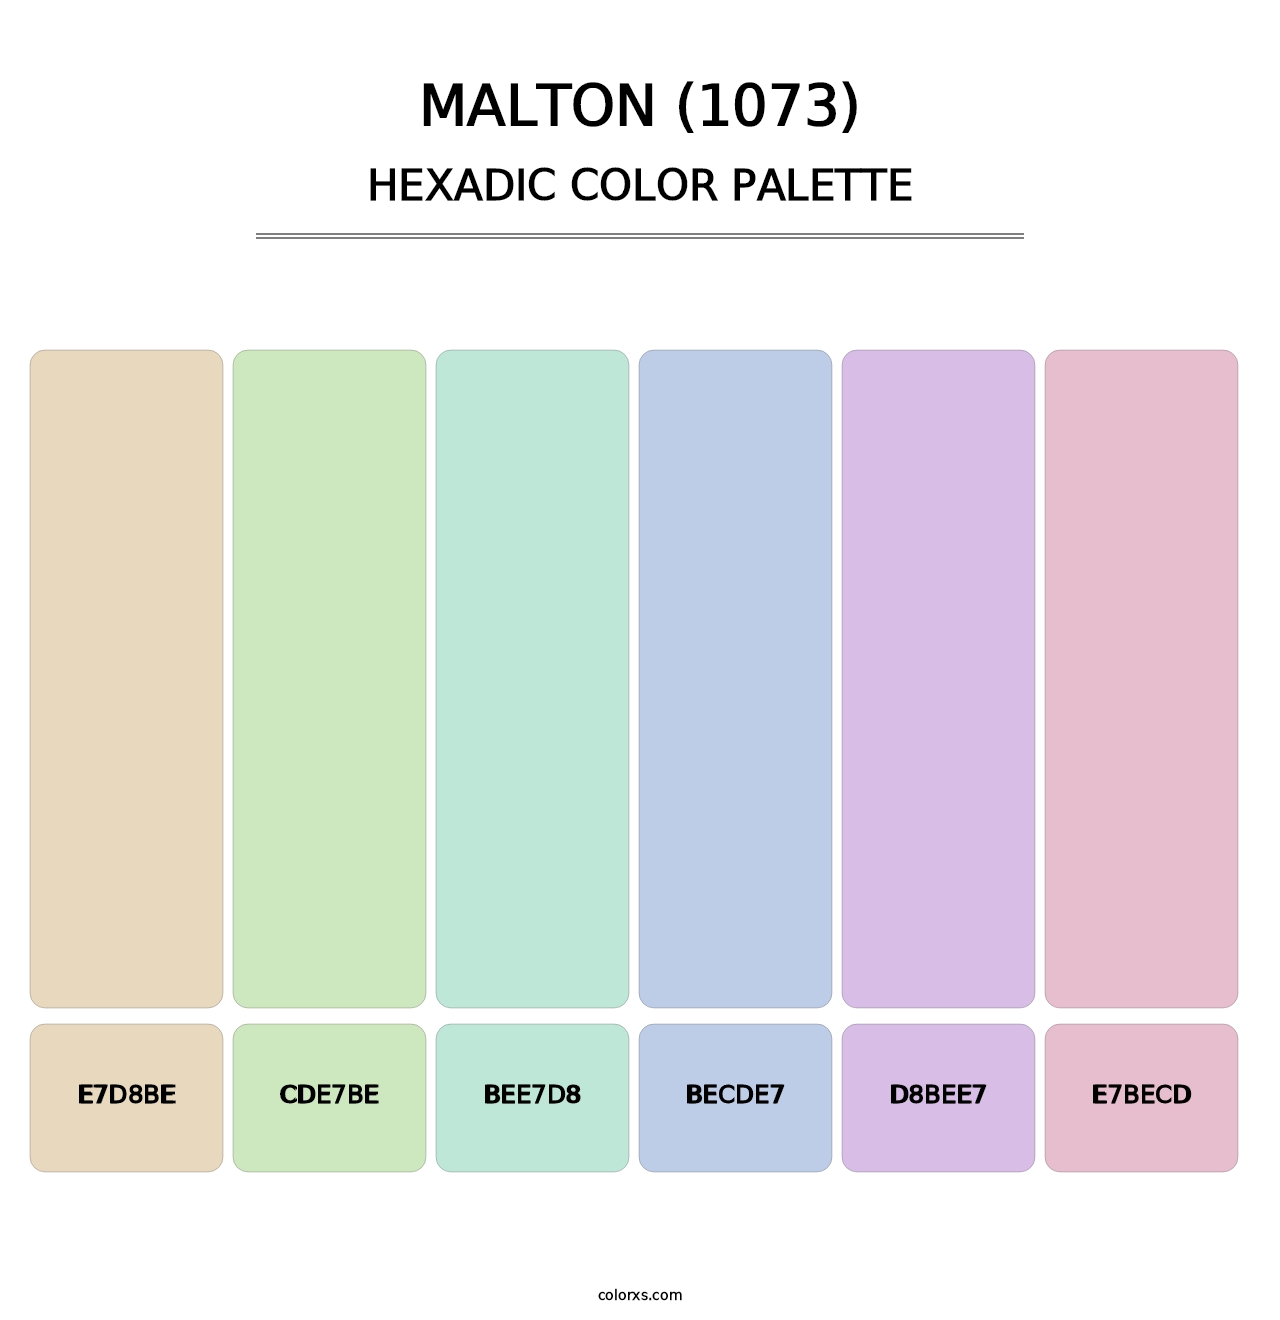 Malton (1073) - Hexadic Color Palette